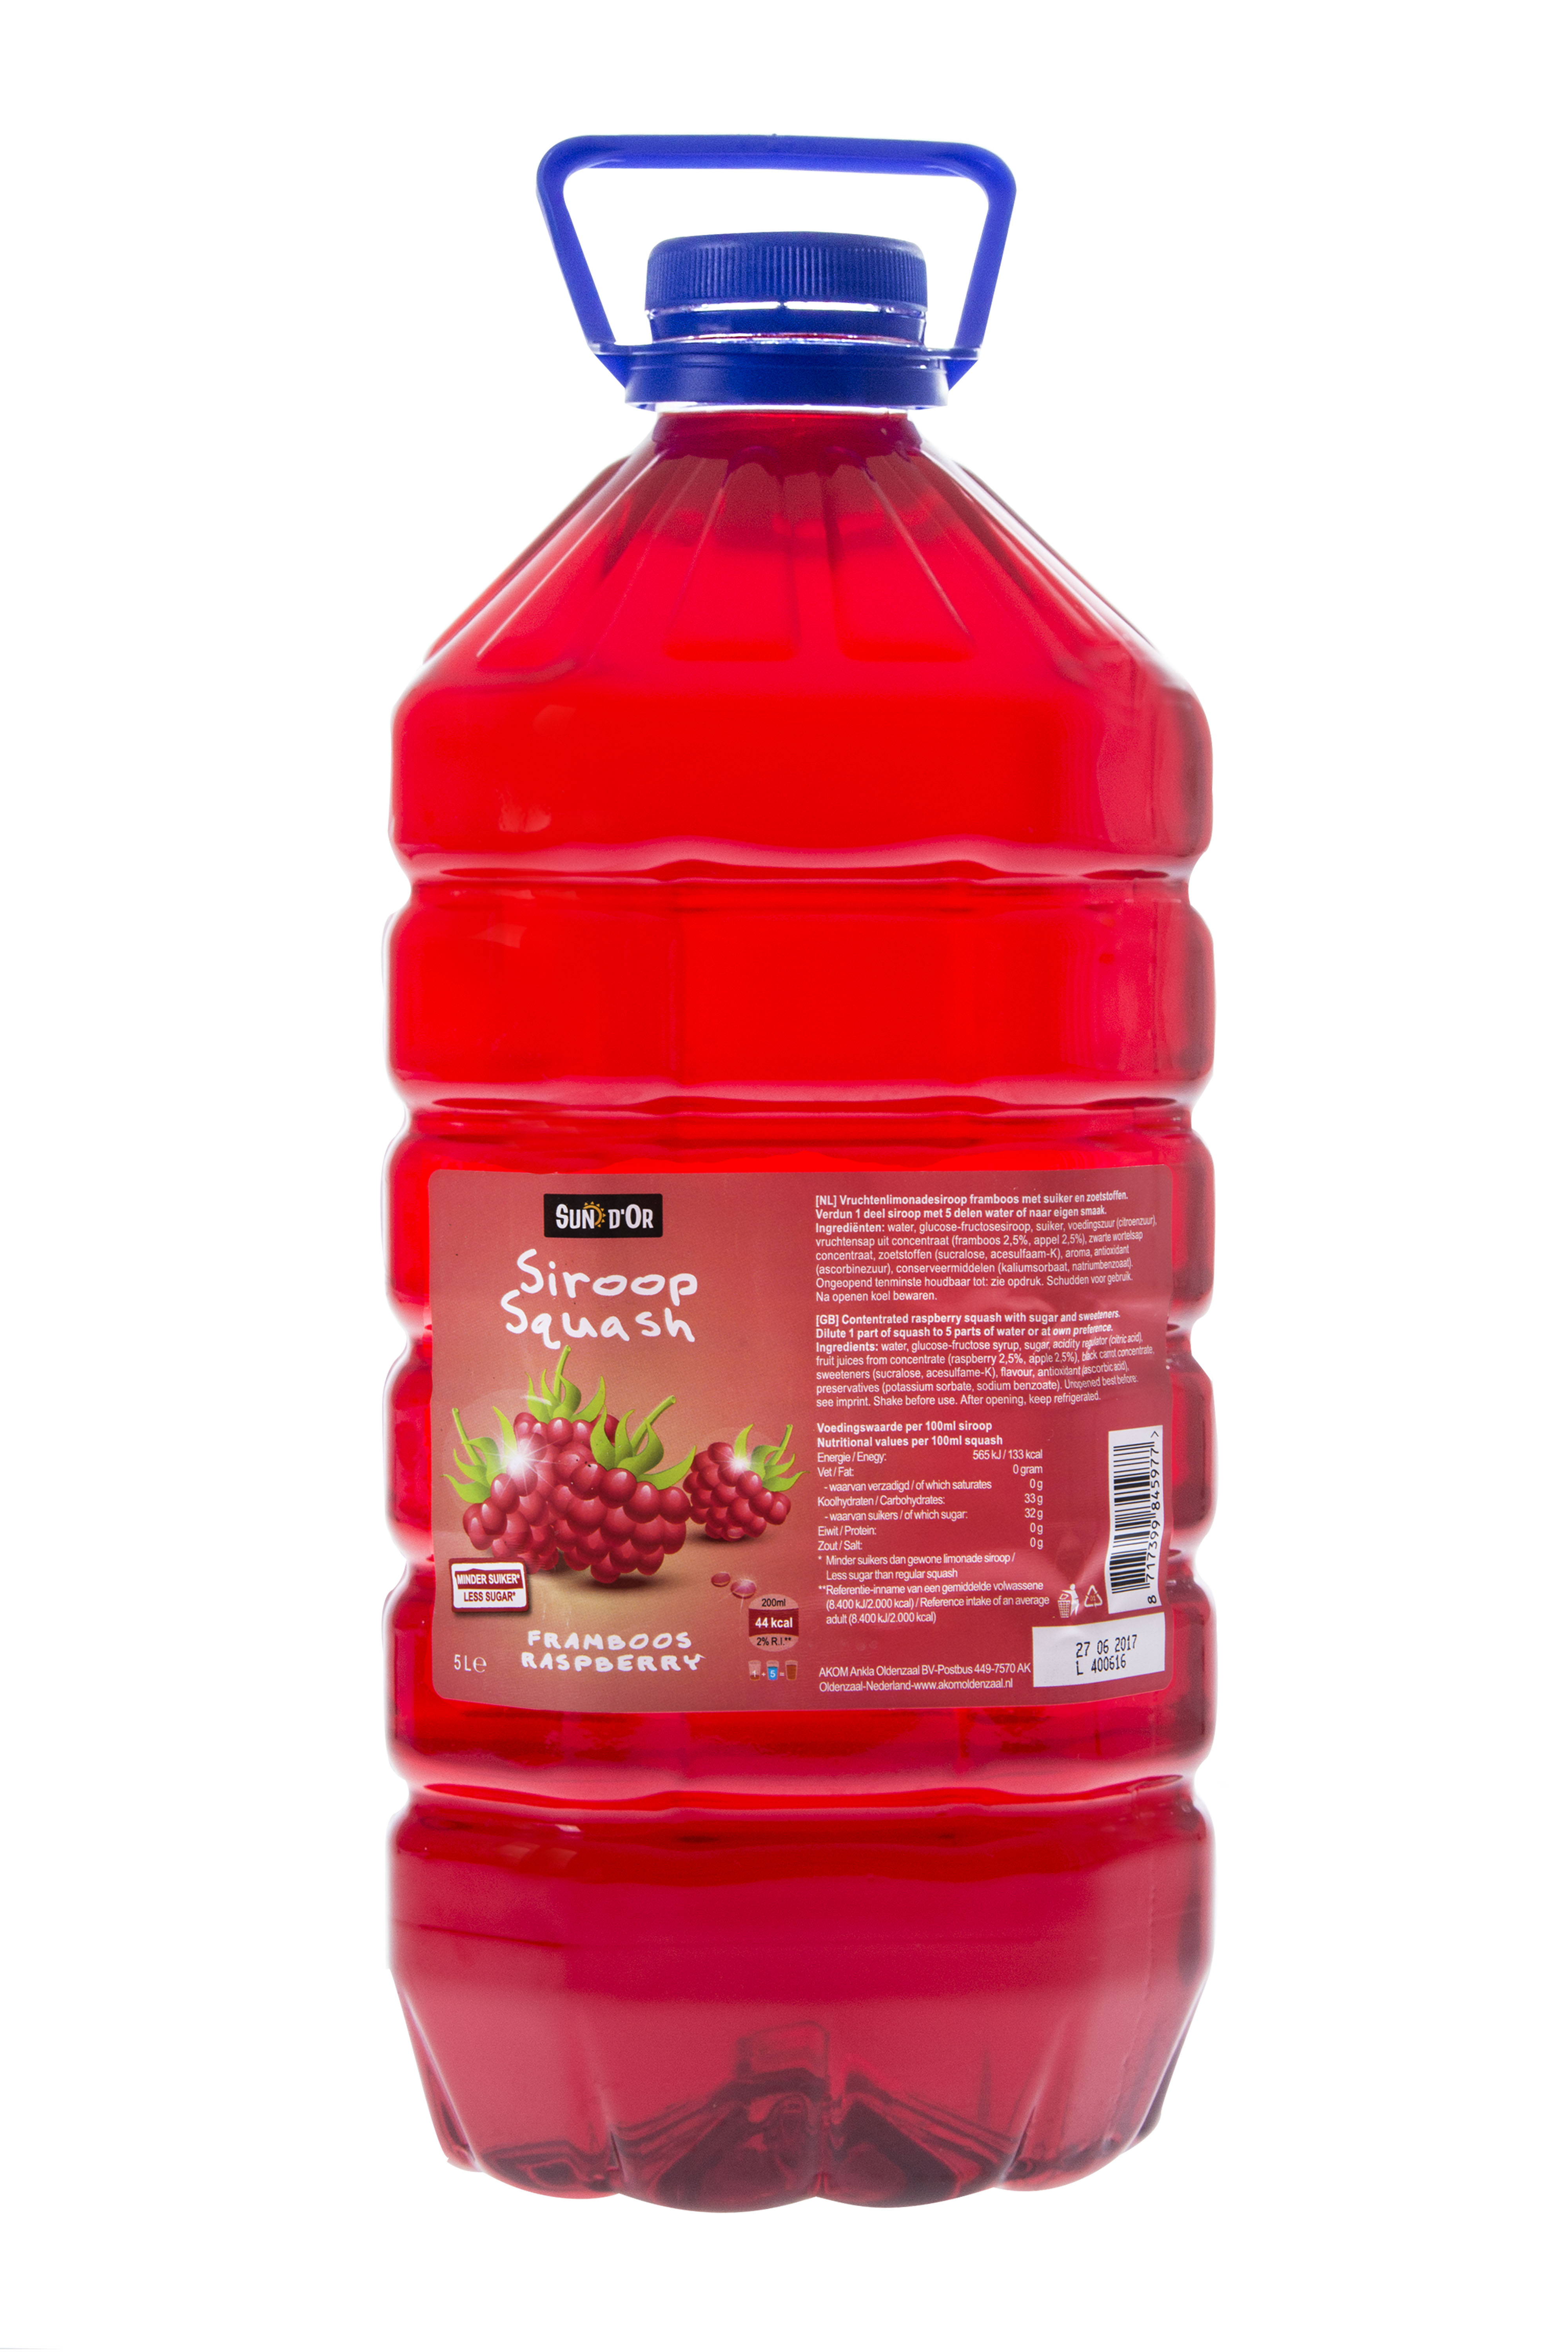 Sun d'Or Raspberry Fruit Squash 5 liter 